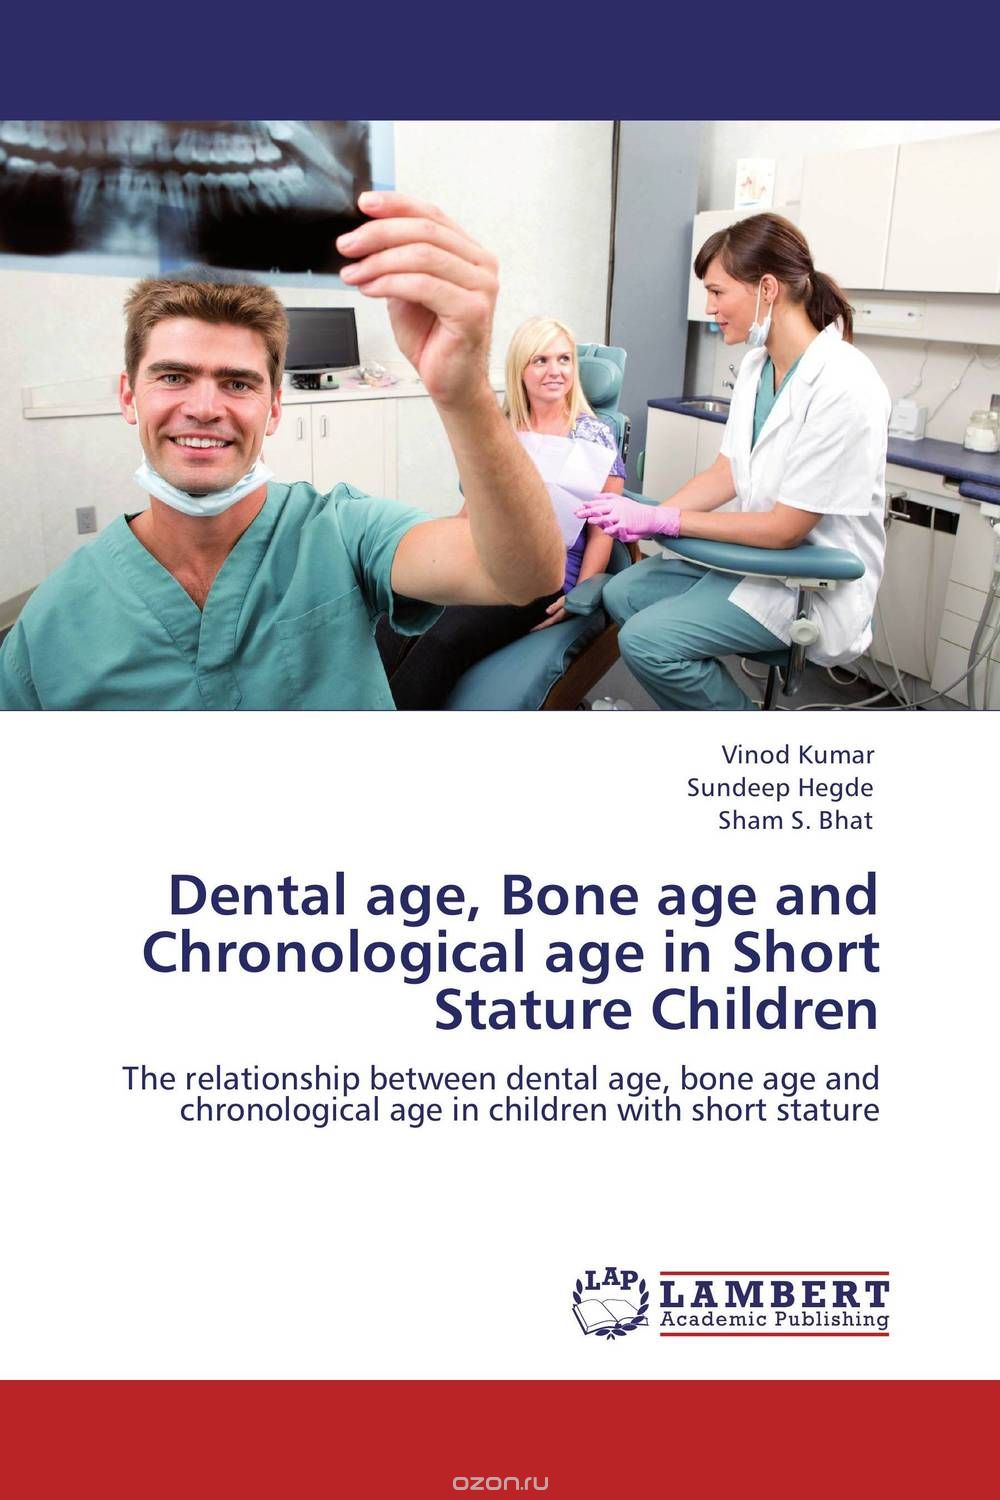 Скачать книгу "Dental age, Bone age and Chronological age in Short Stature Children"